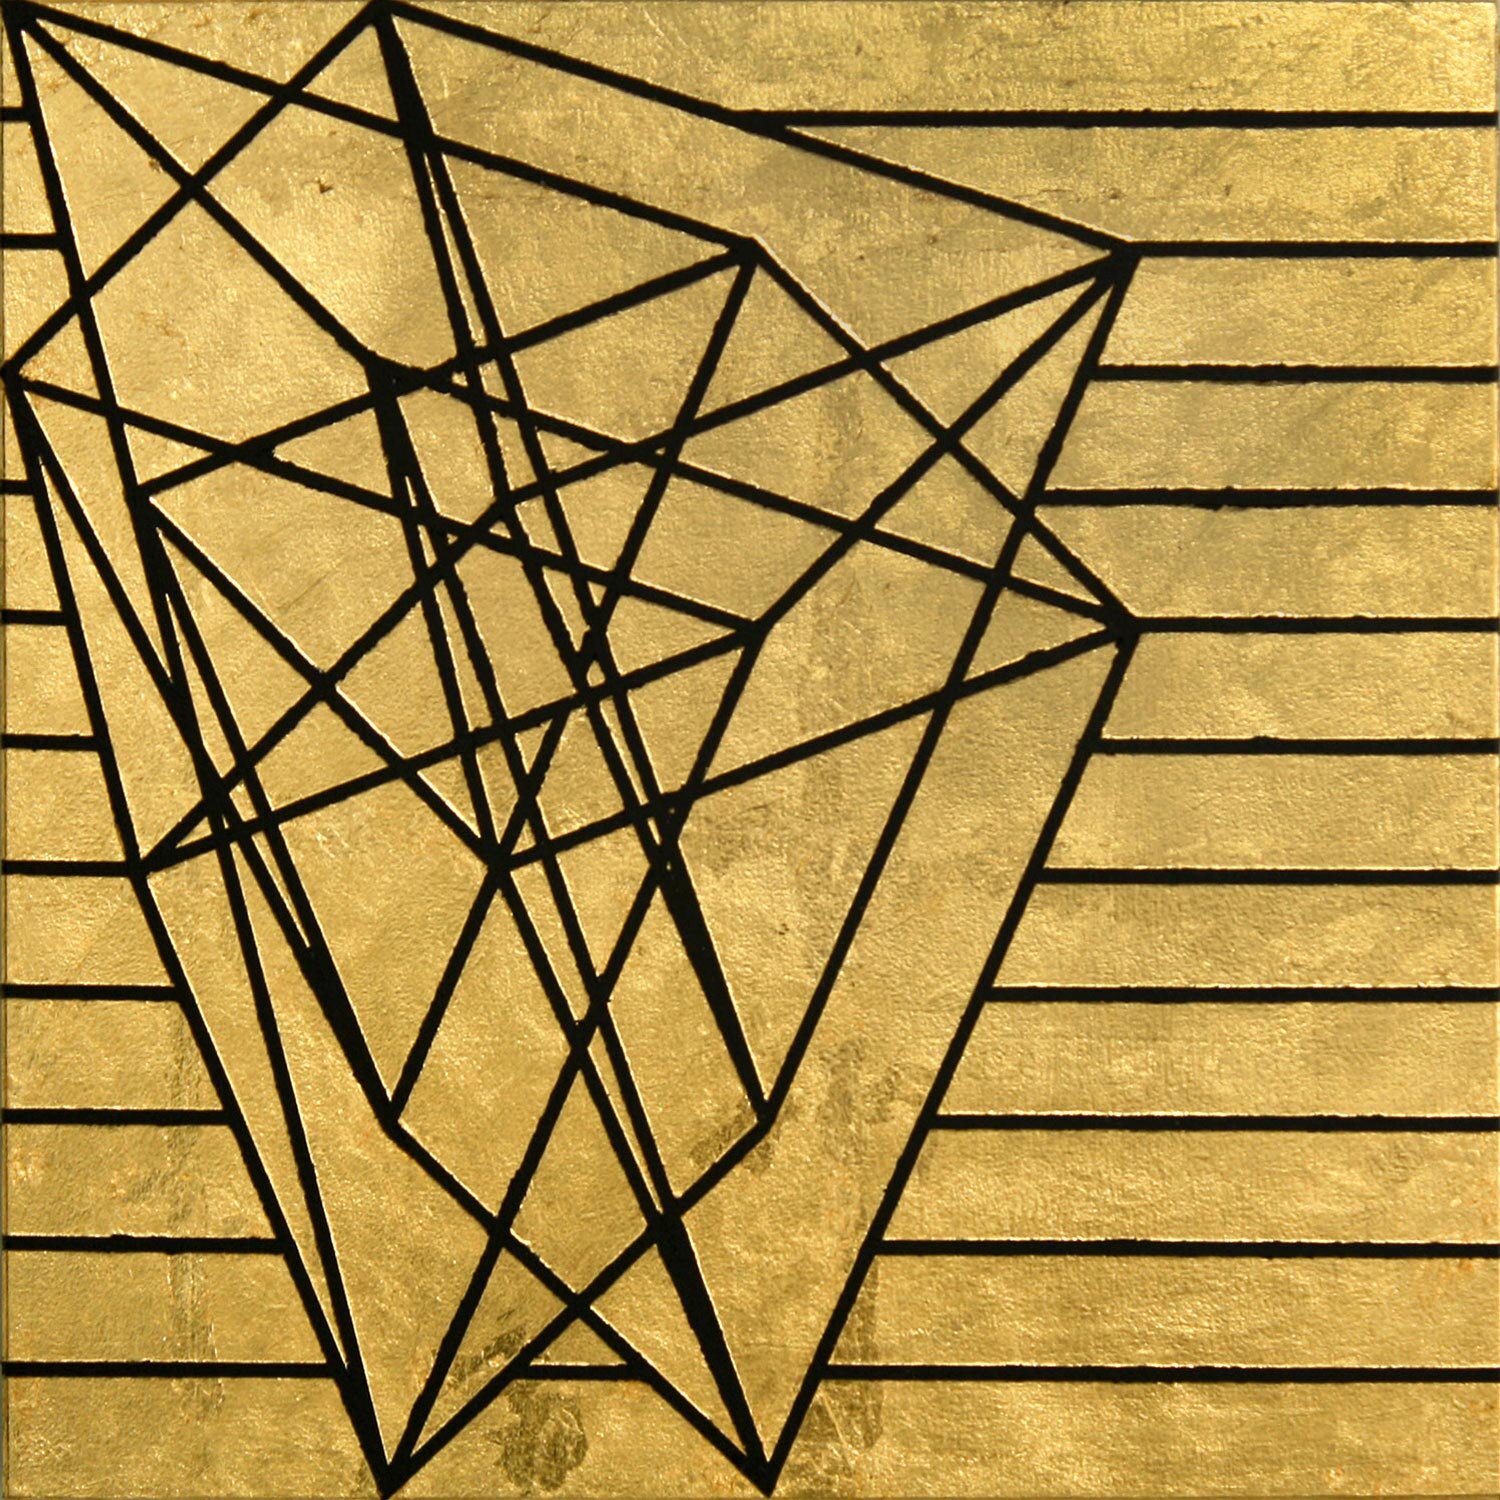    Hisz Dat Cowurlen (I)    Acrylic and gold leaf on wood panel  12” x 12”   